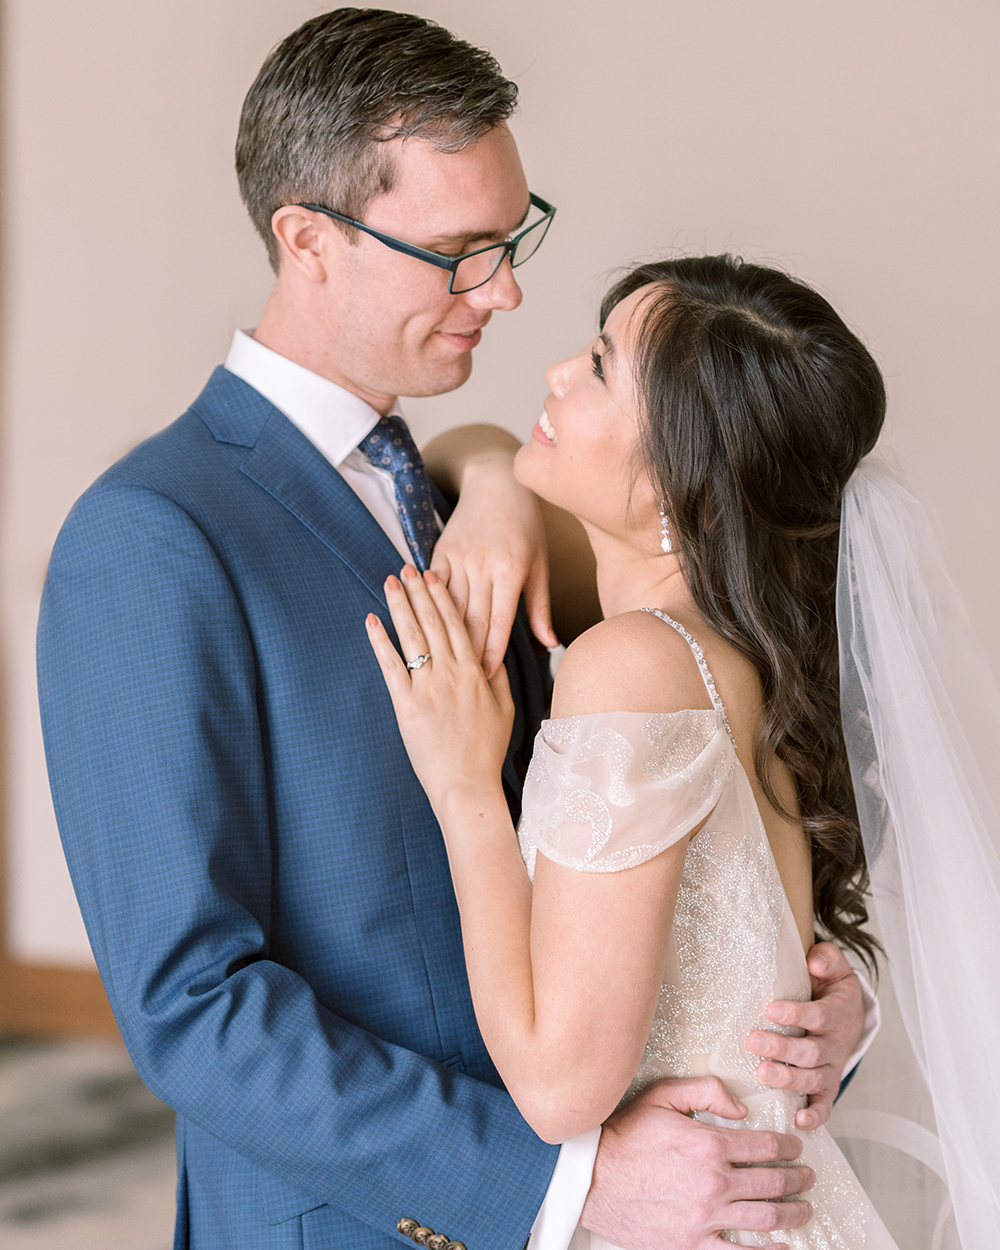 houston wedding photography - intimate moments